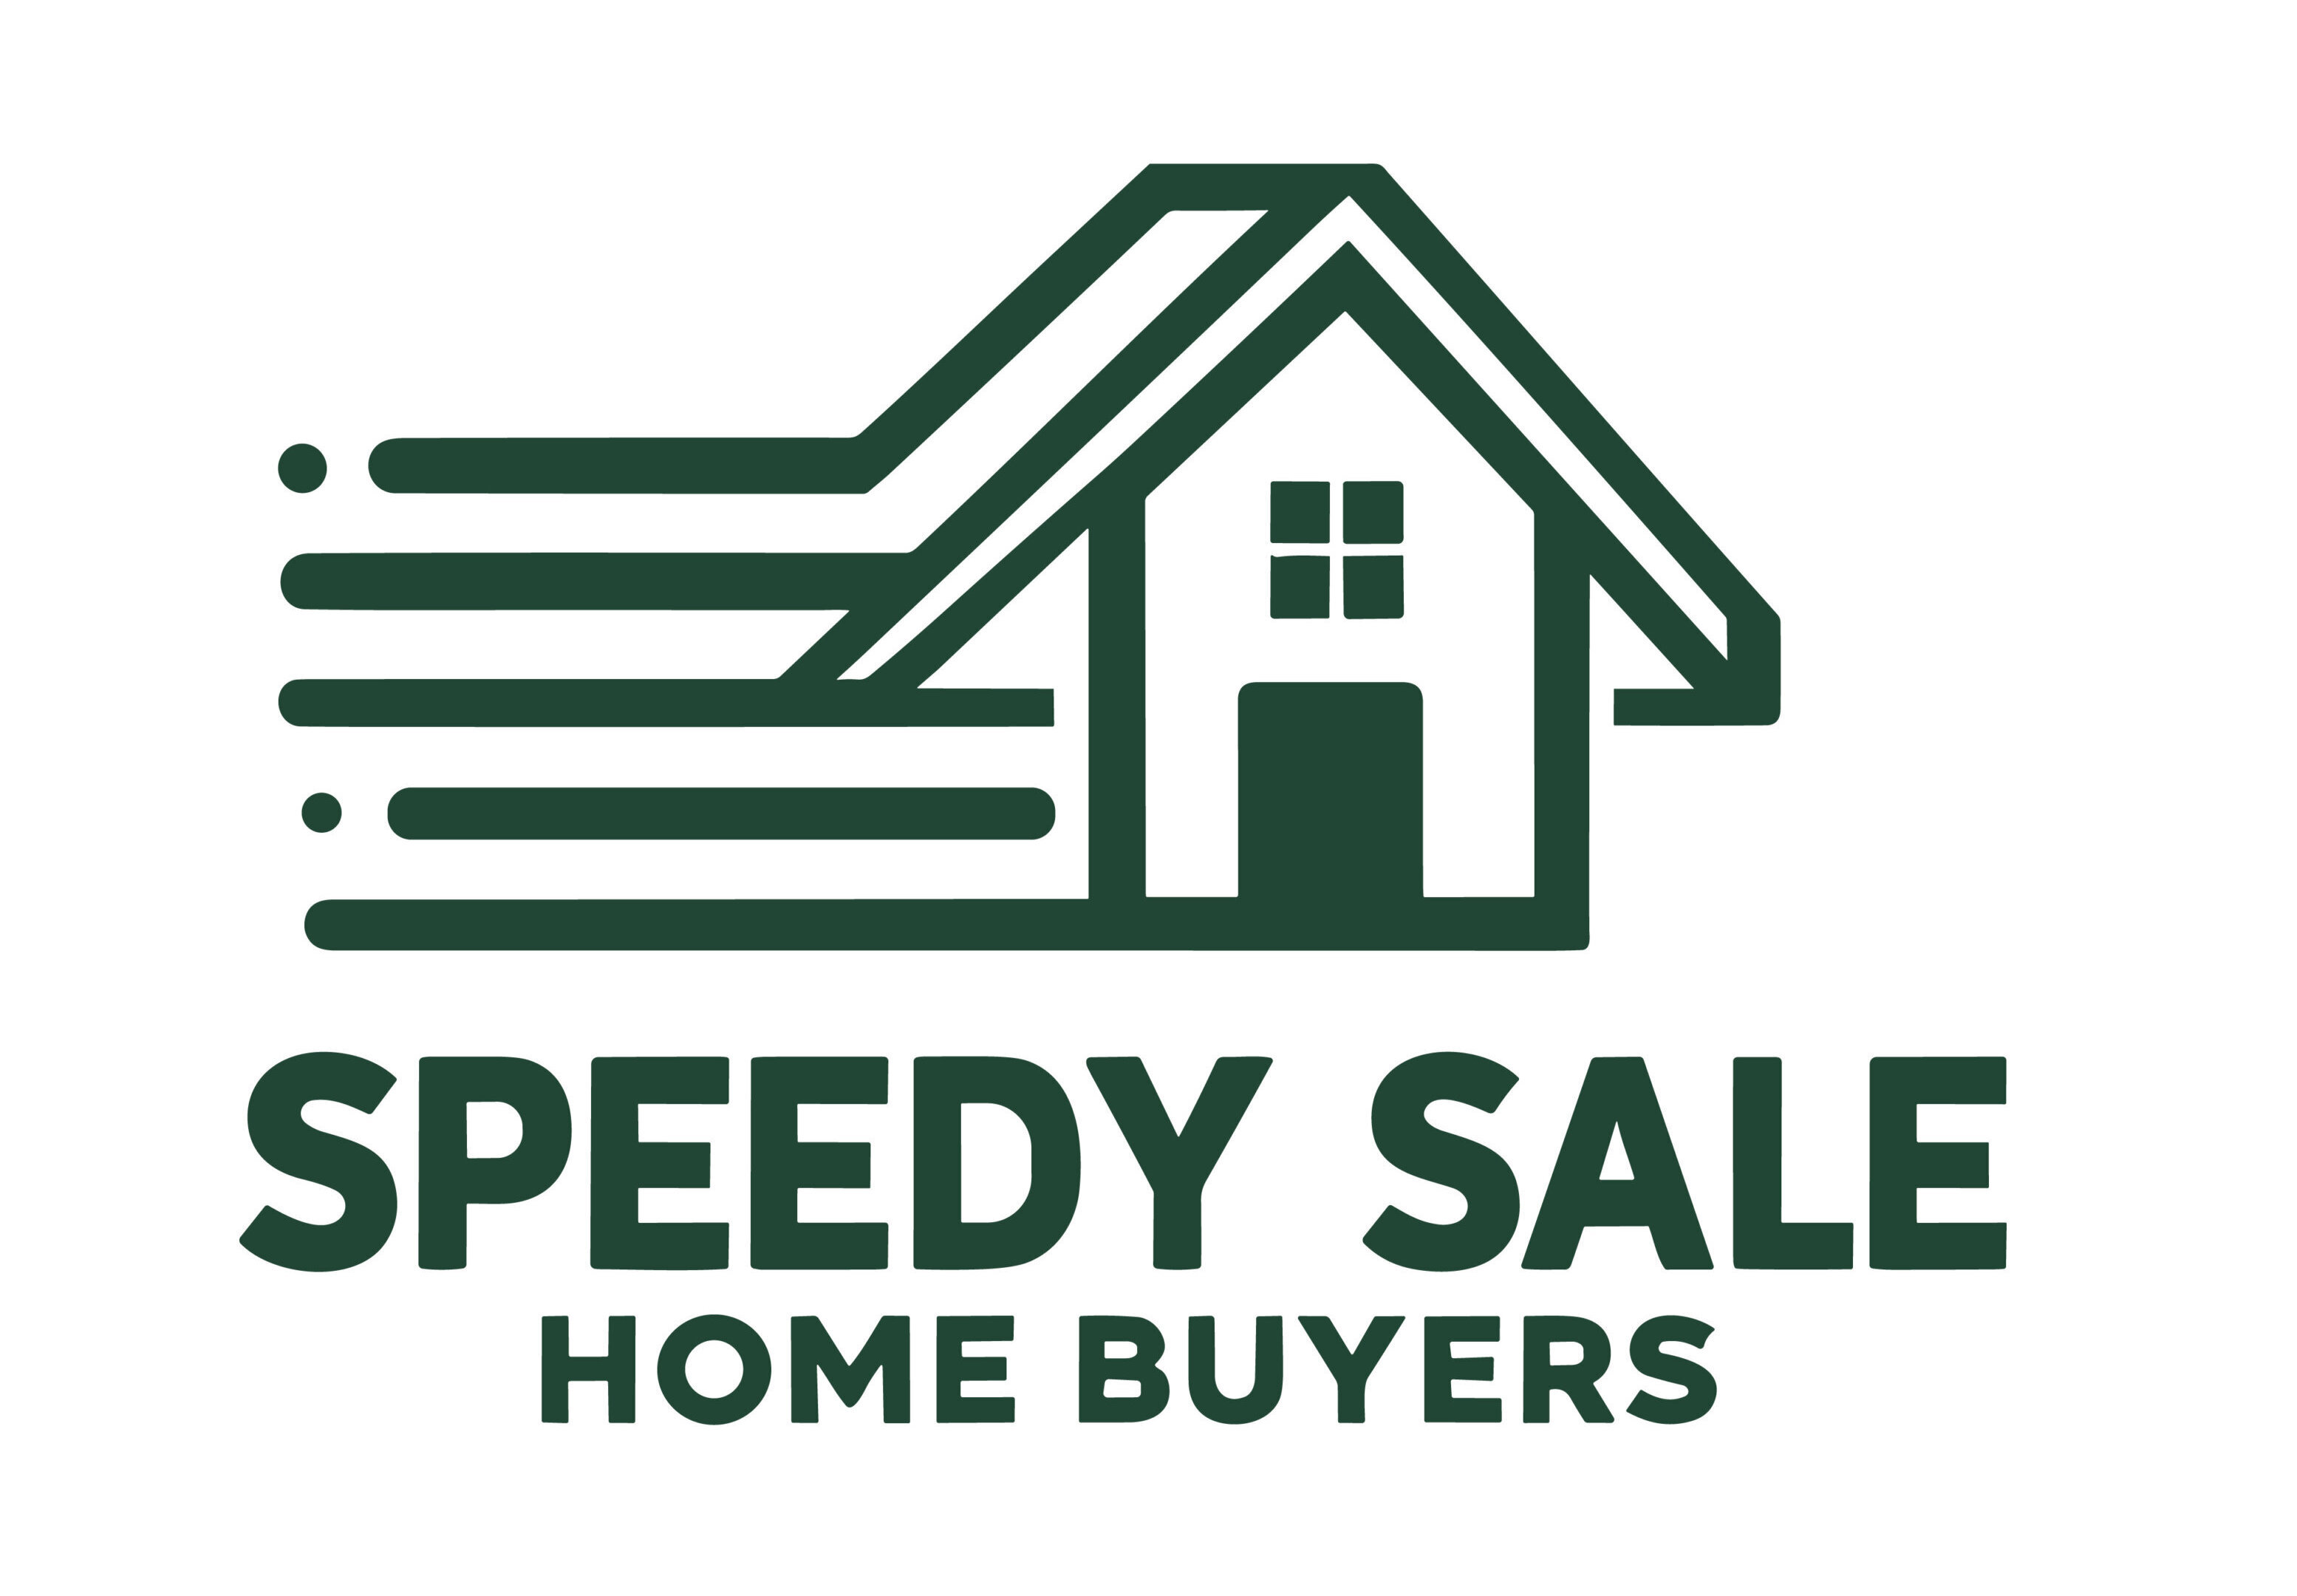 Speedy Sale Home Buyers logo